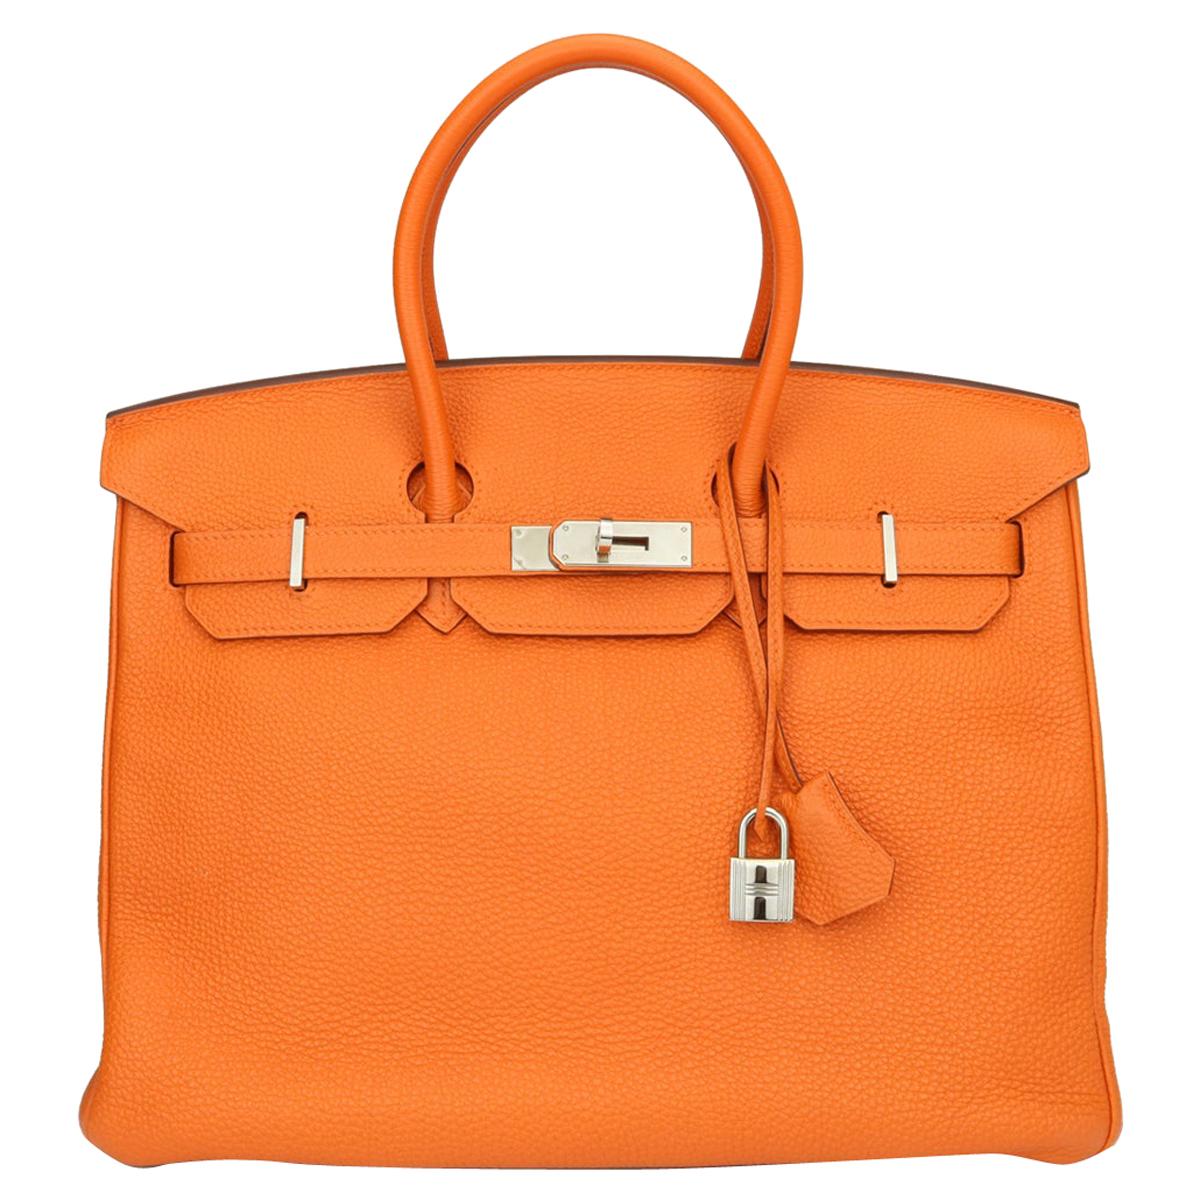 Hermès Birkin 35cm Bag Orange Togo Leather Palladium Hardware Stamp N Year 2010